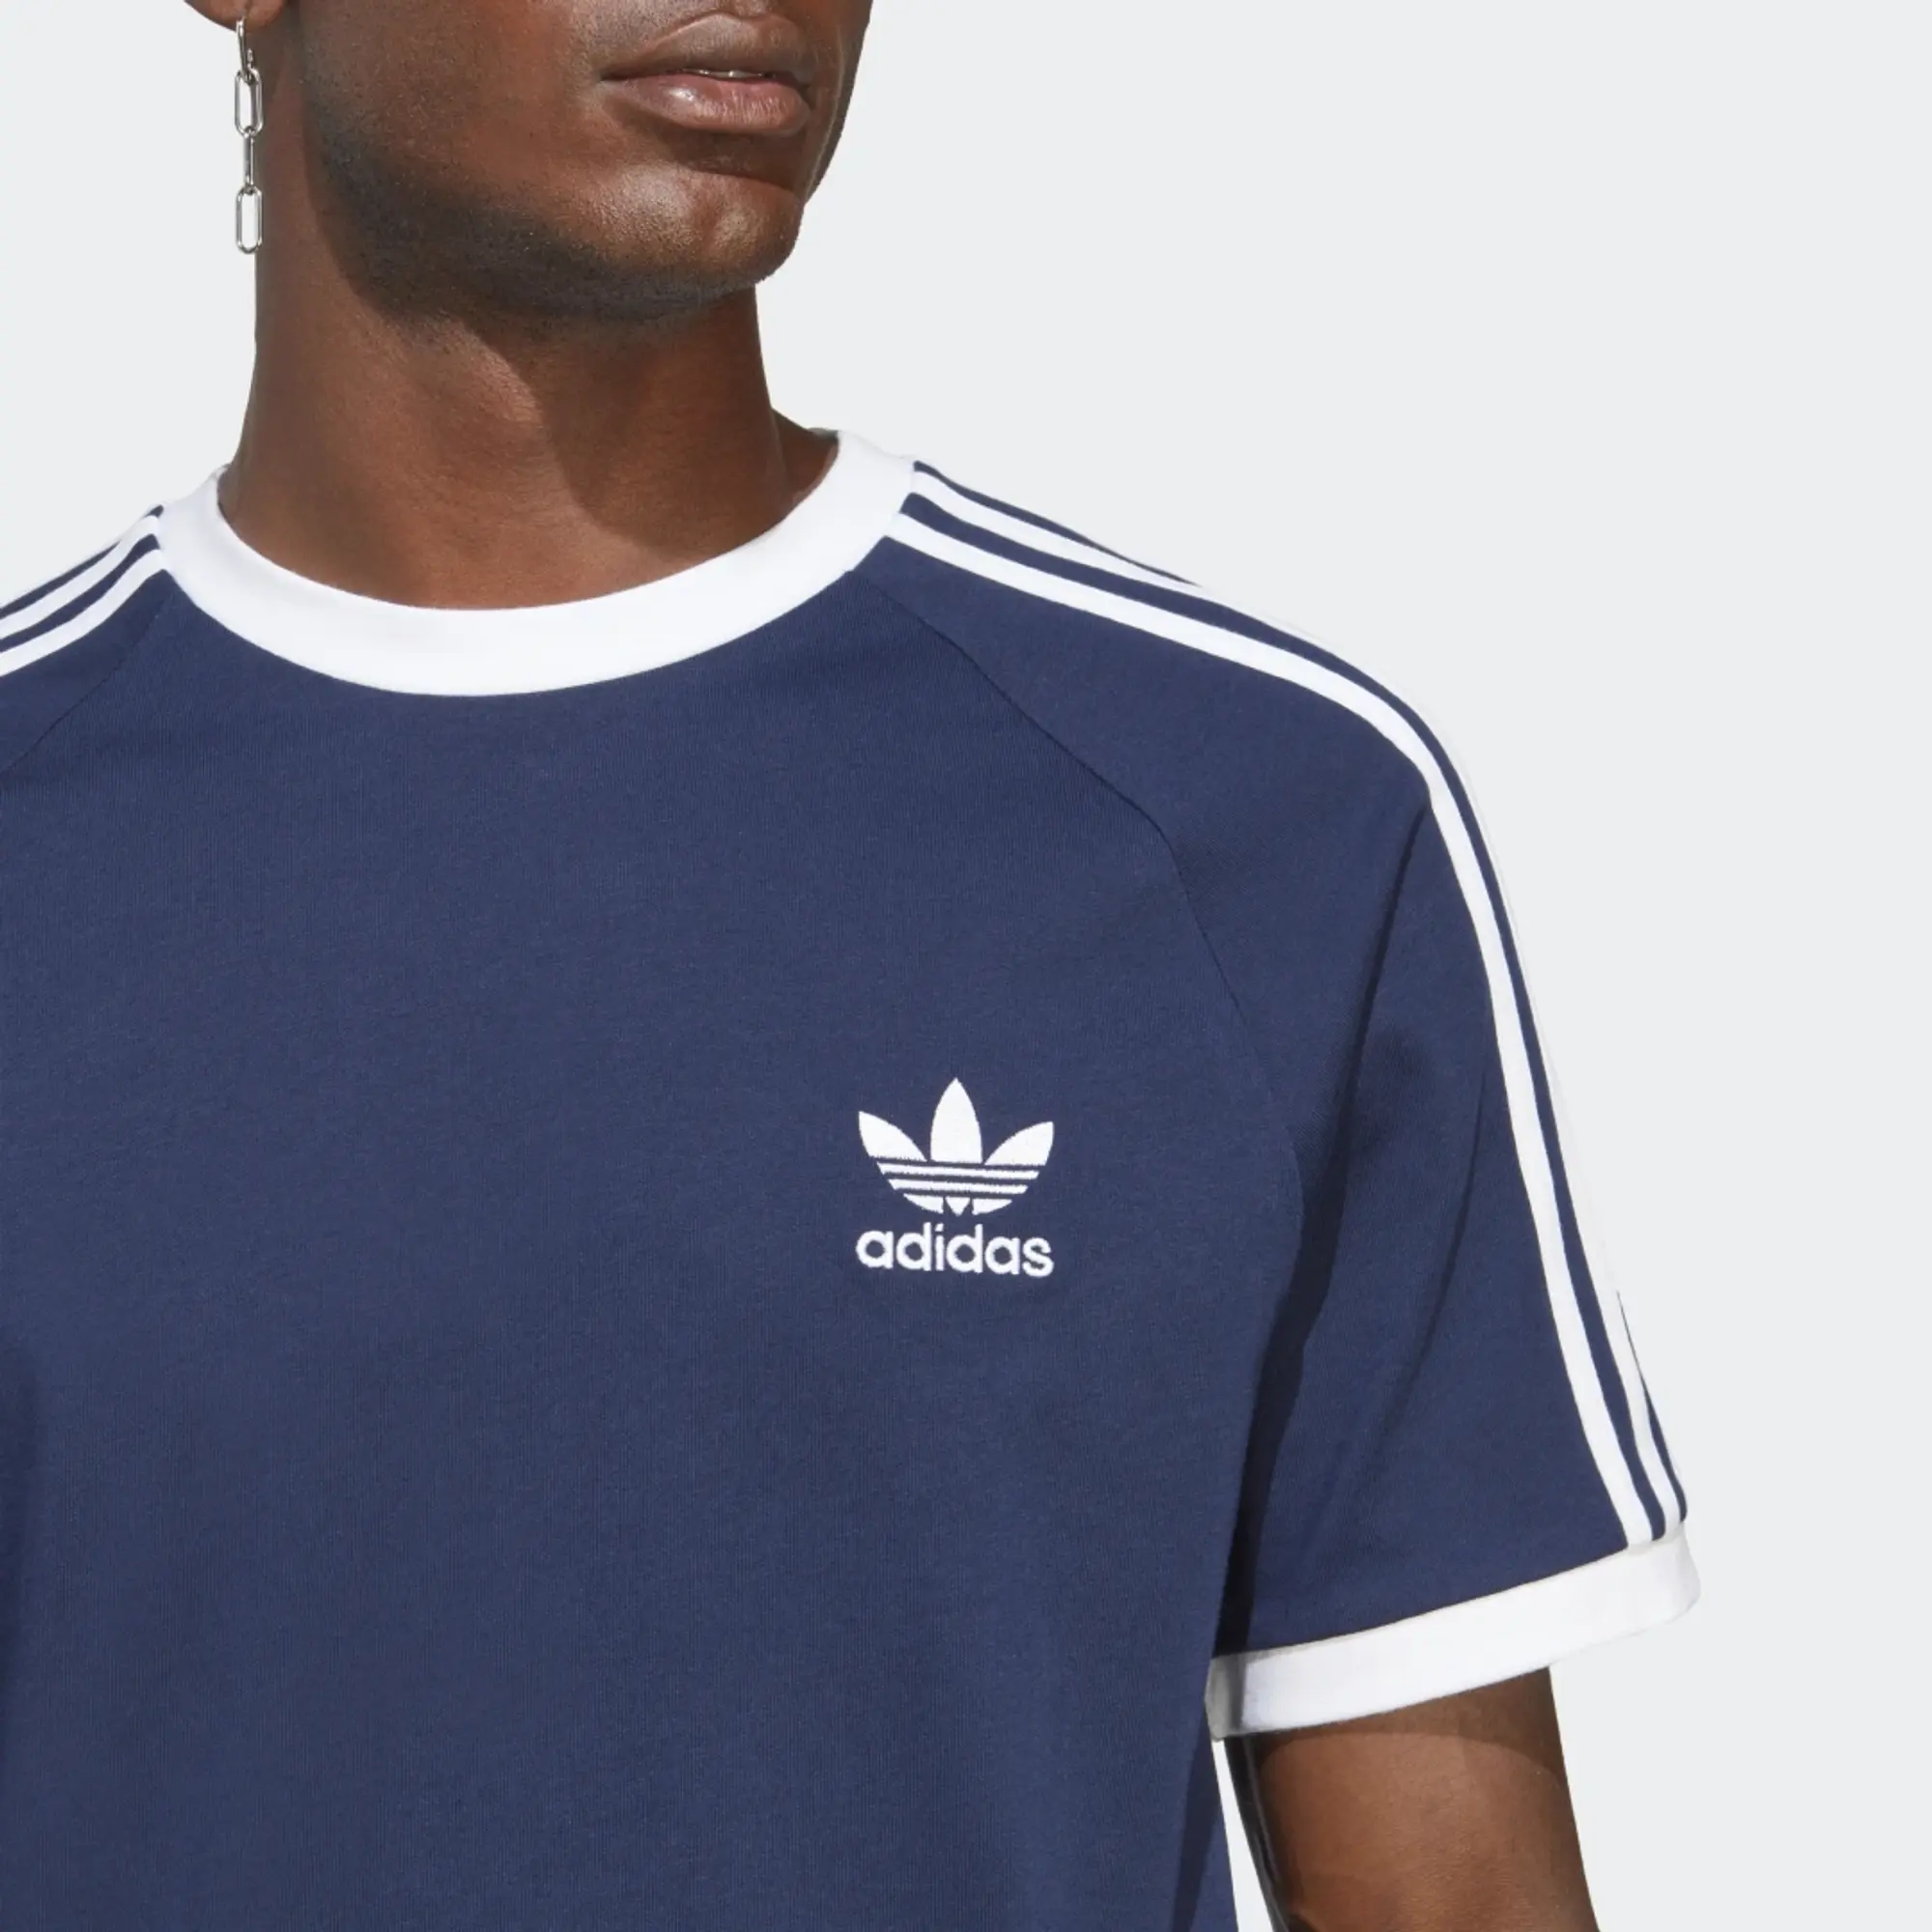 adidas Originals Men's 3-Stripes T-Shirt - Navy, Navy